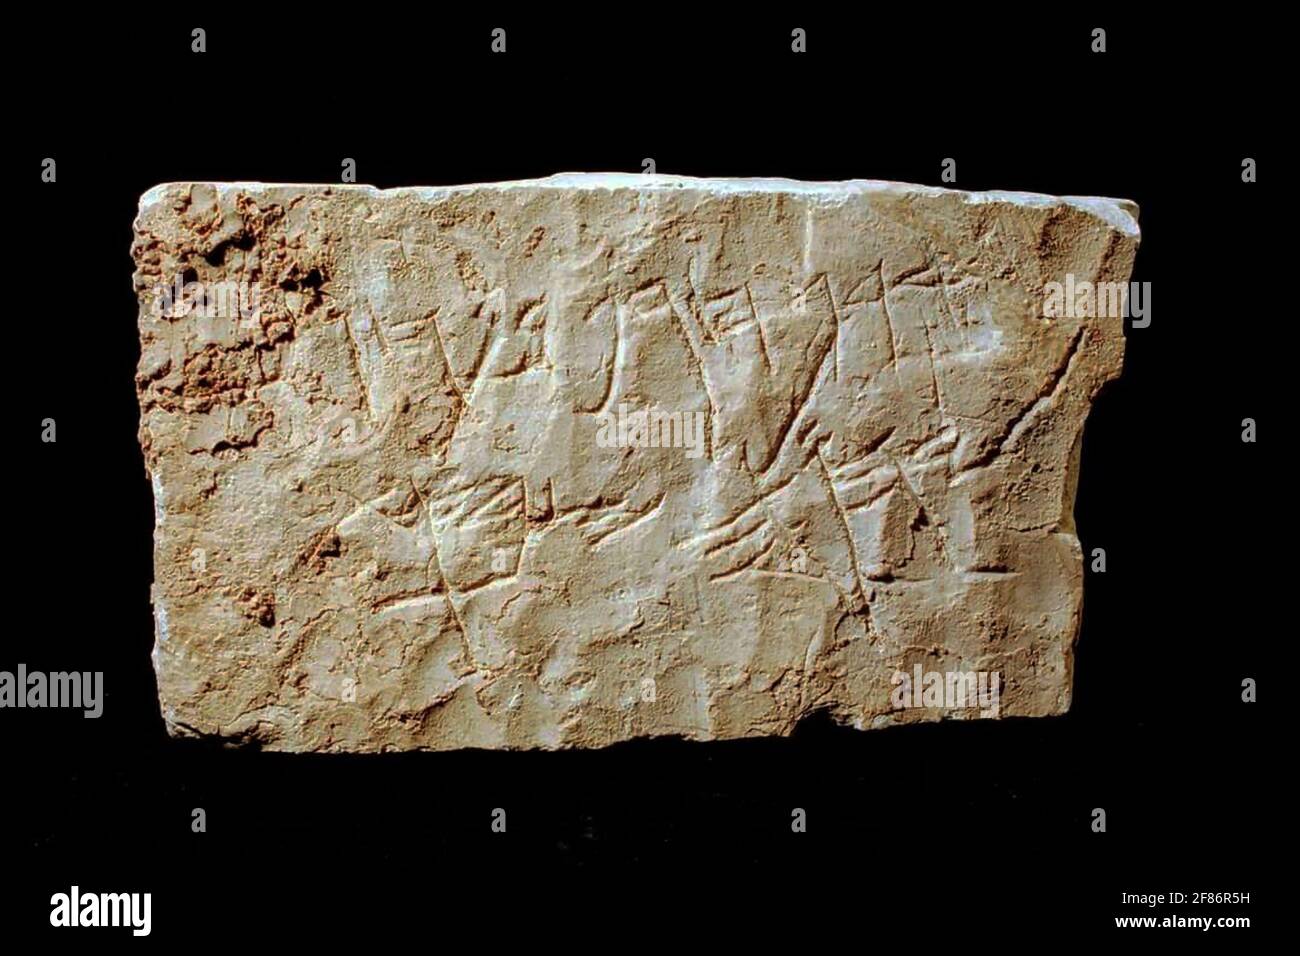 6855. Inscription hébraïque de la 8e. C.-B. Le nom explicite de Dieu apparaît dans le texte. "Hagaf ben Hagev (par) Dieu" Banque D'Images